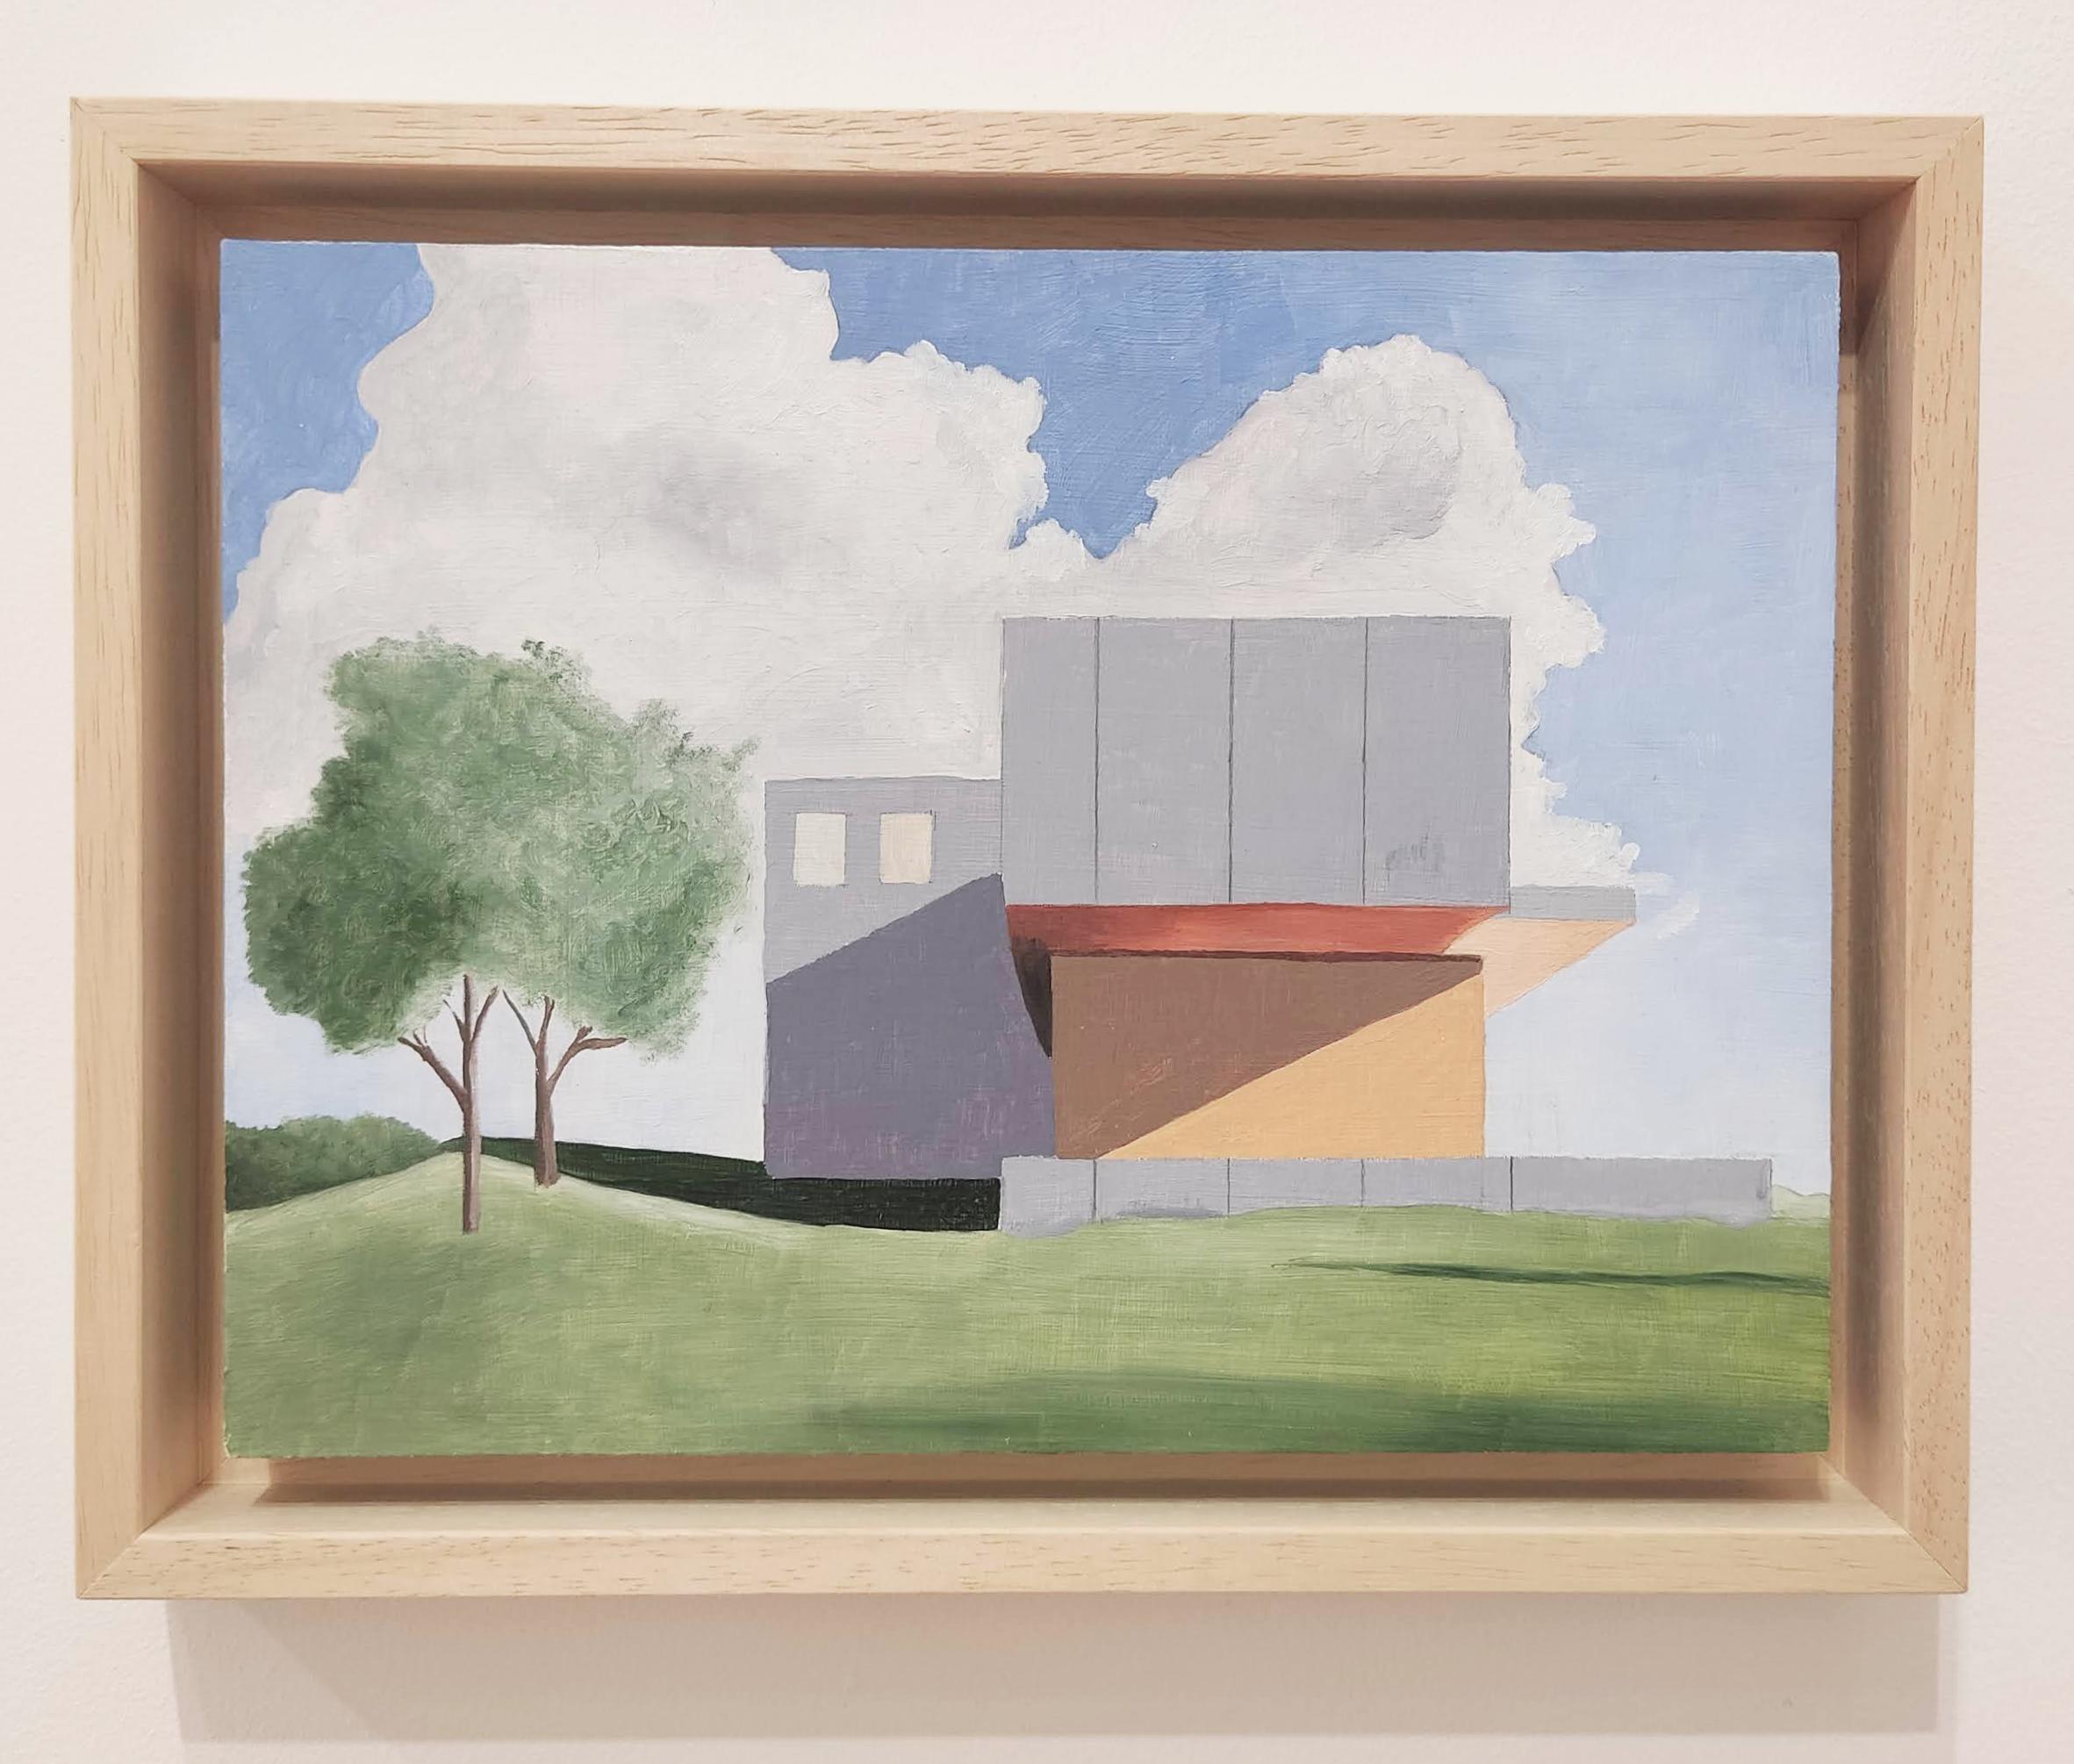 A the Window, Original Oil Painting, Landscape, Contemporary Architecture